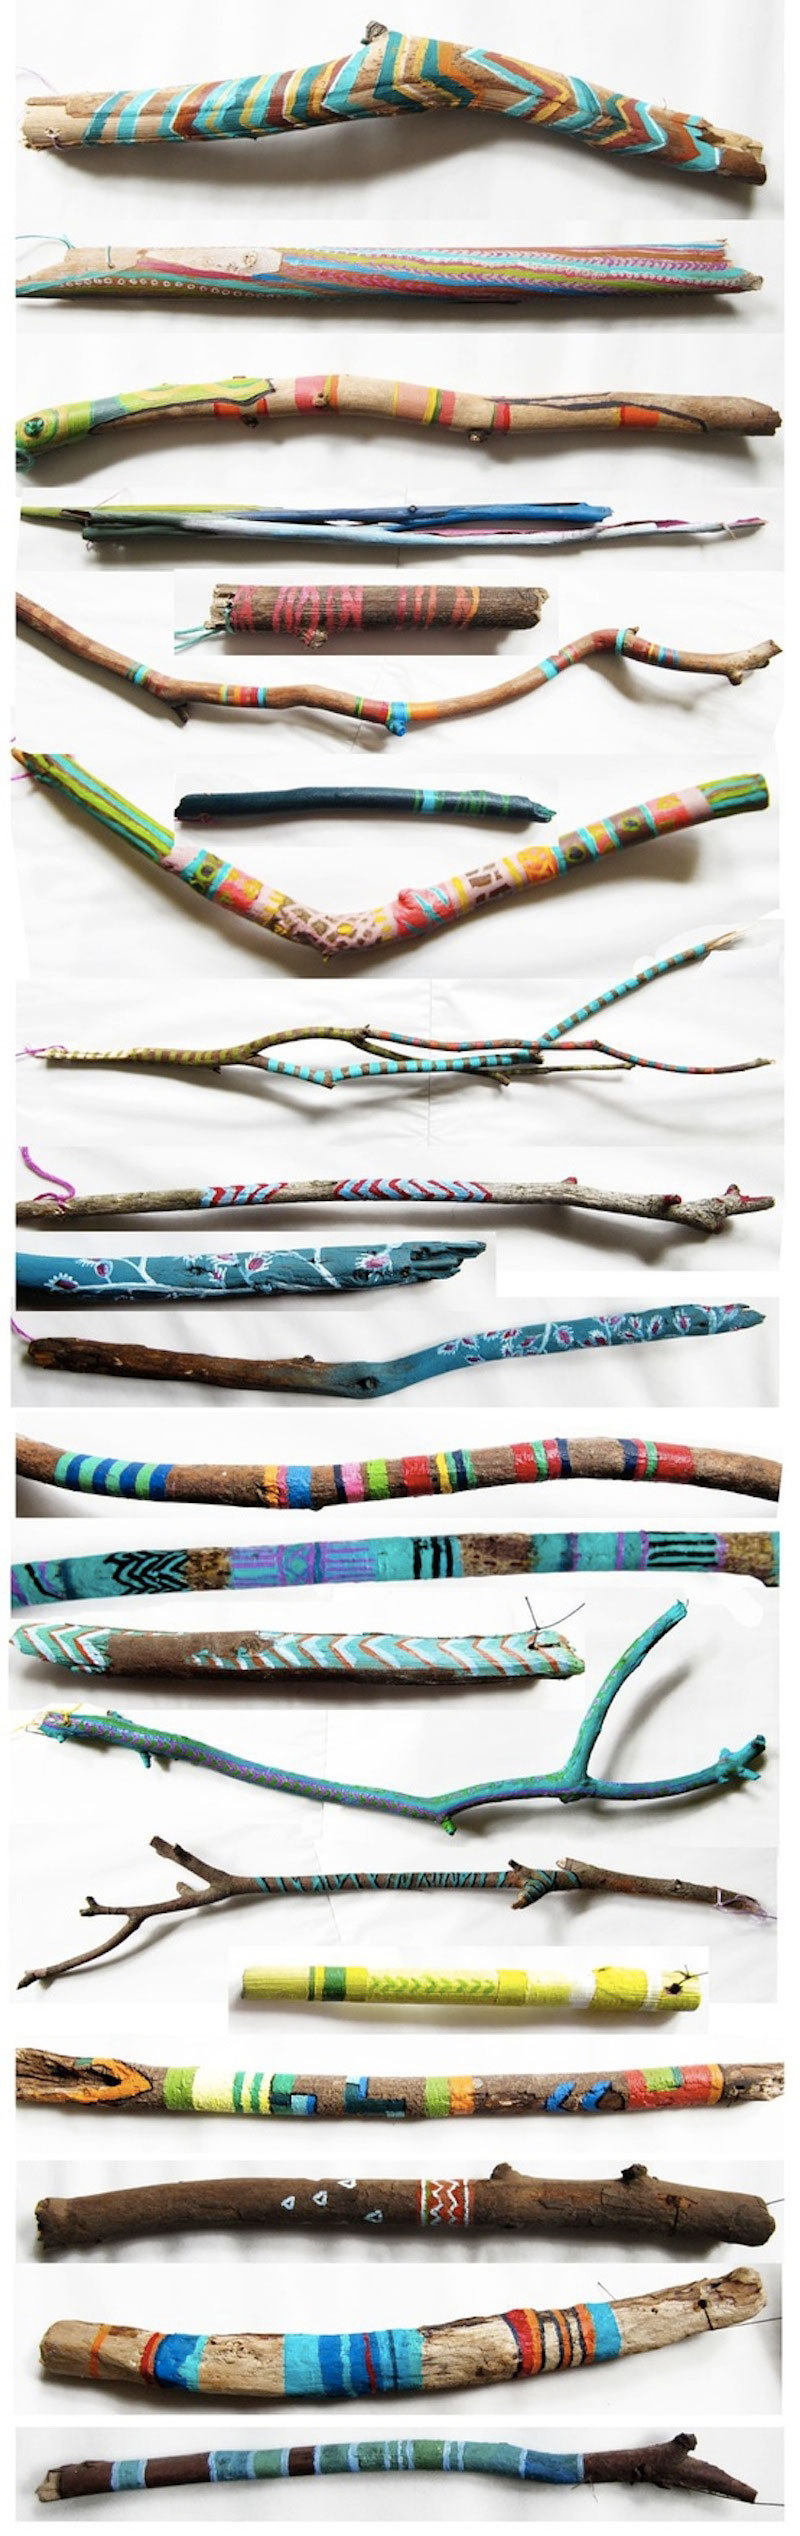 Refried-hippie-DIY-painted-sticks